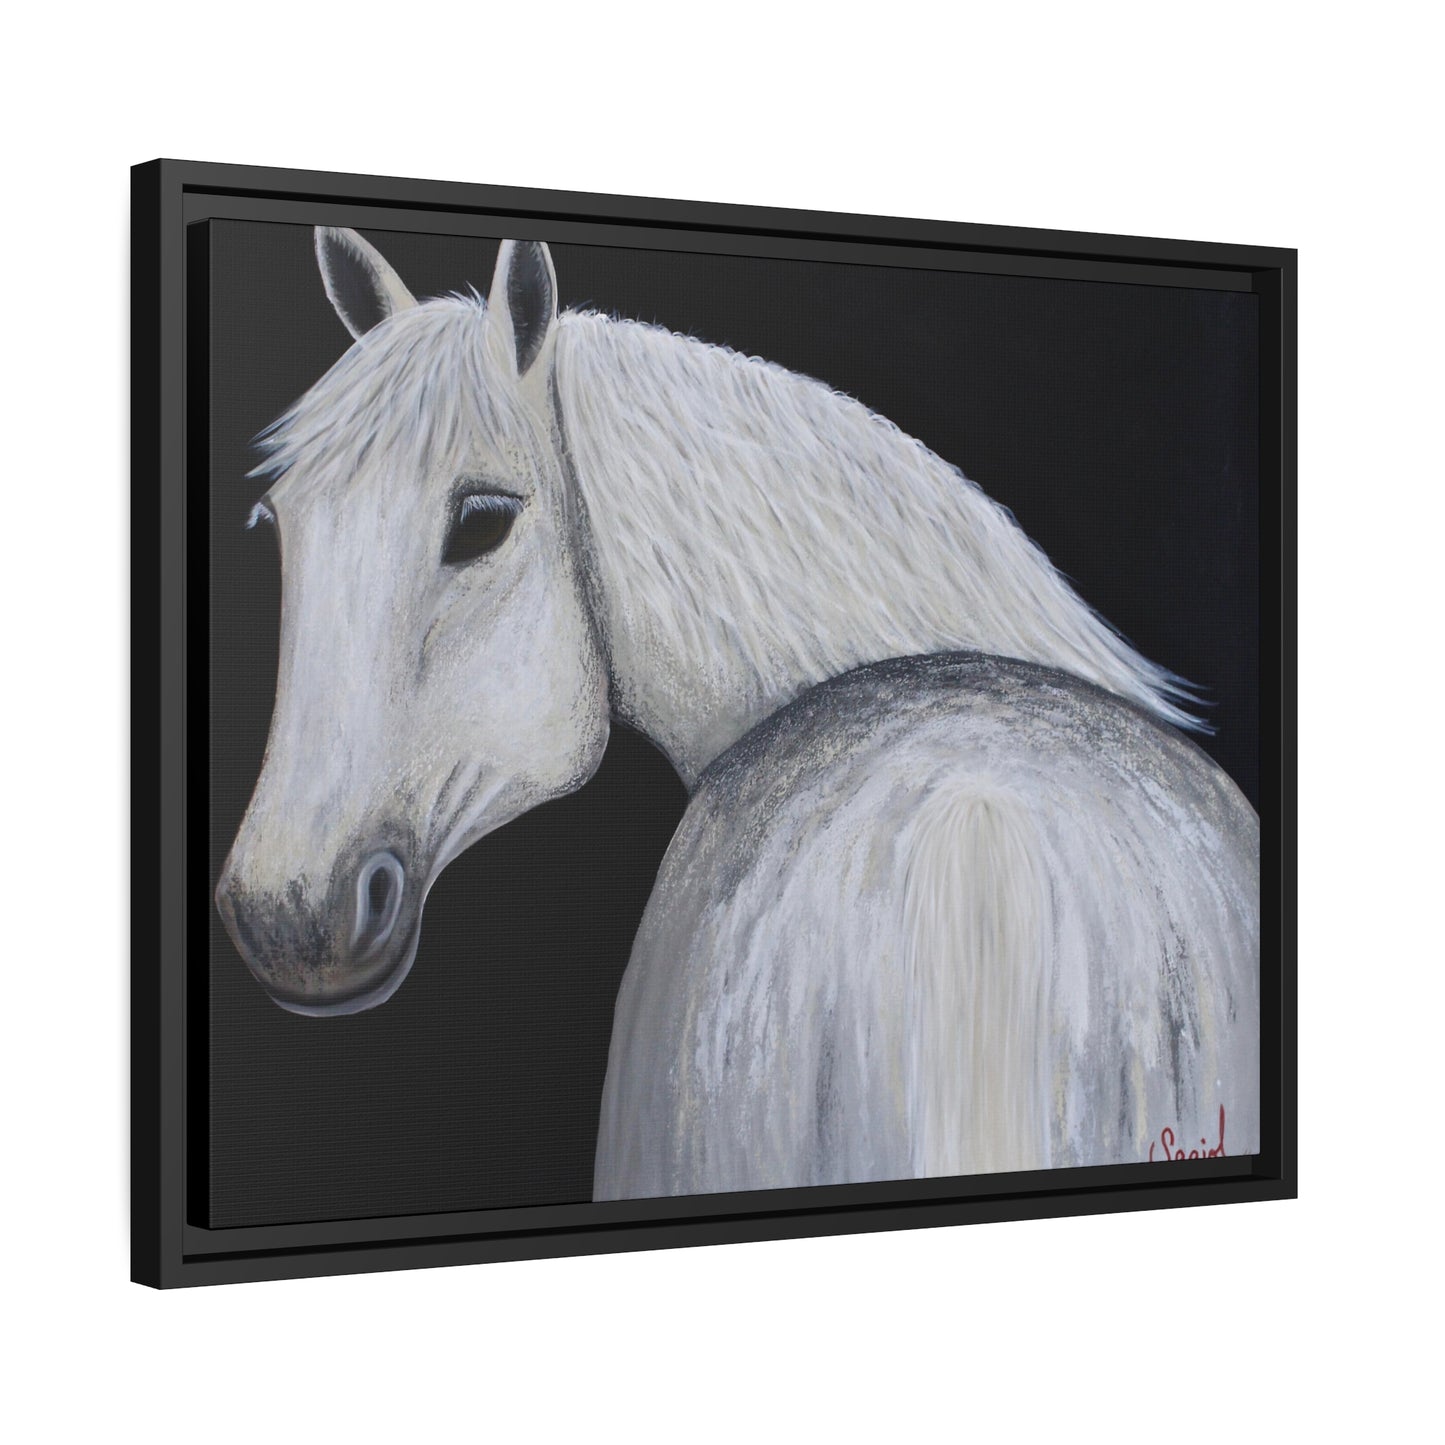 Framed wall Art - framed Art - Wall Canvas - Wall Art - Ghost, Equestrian art painting